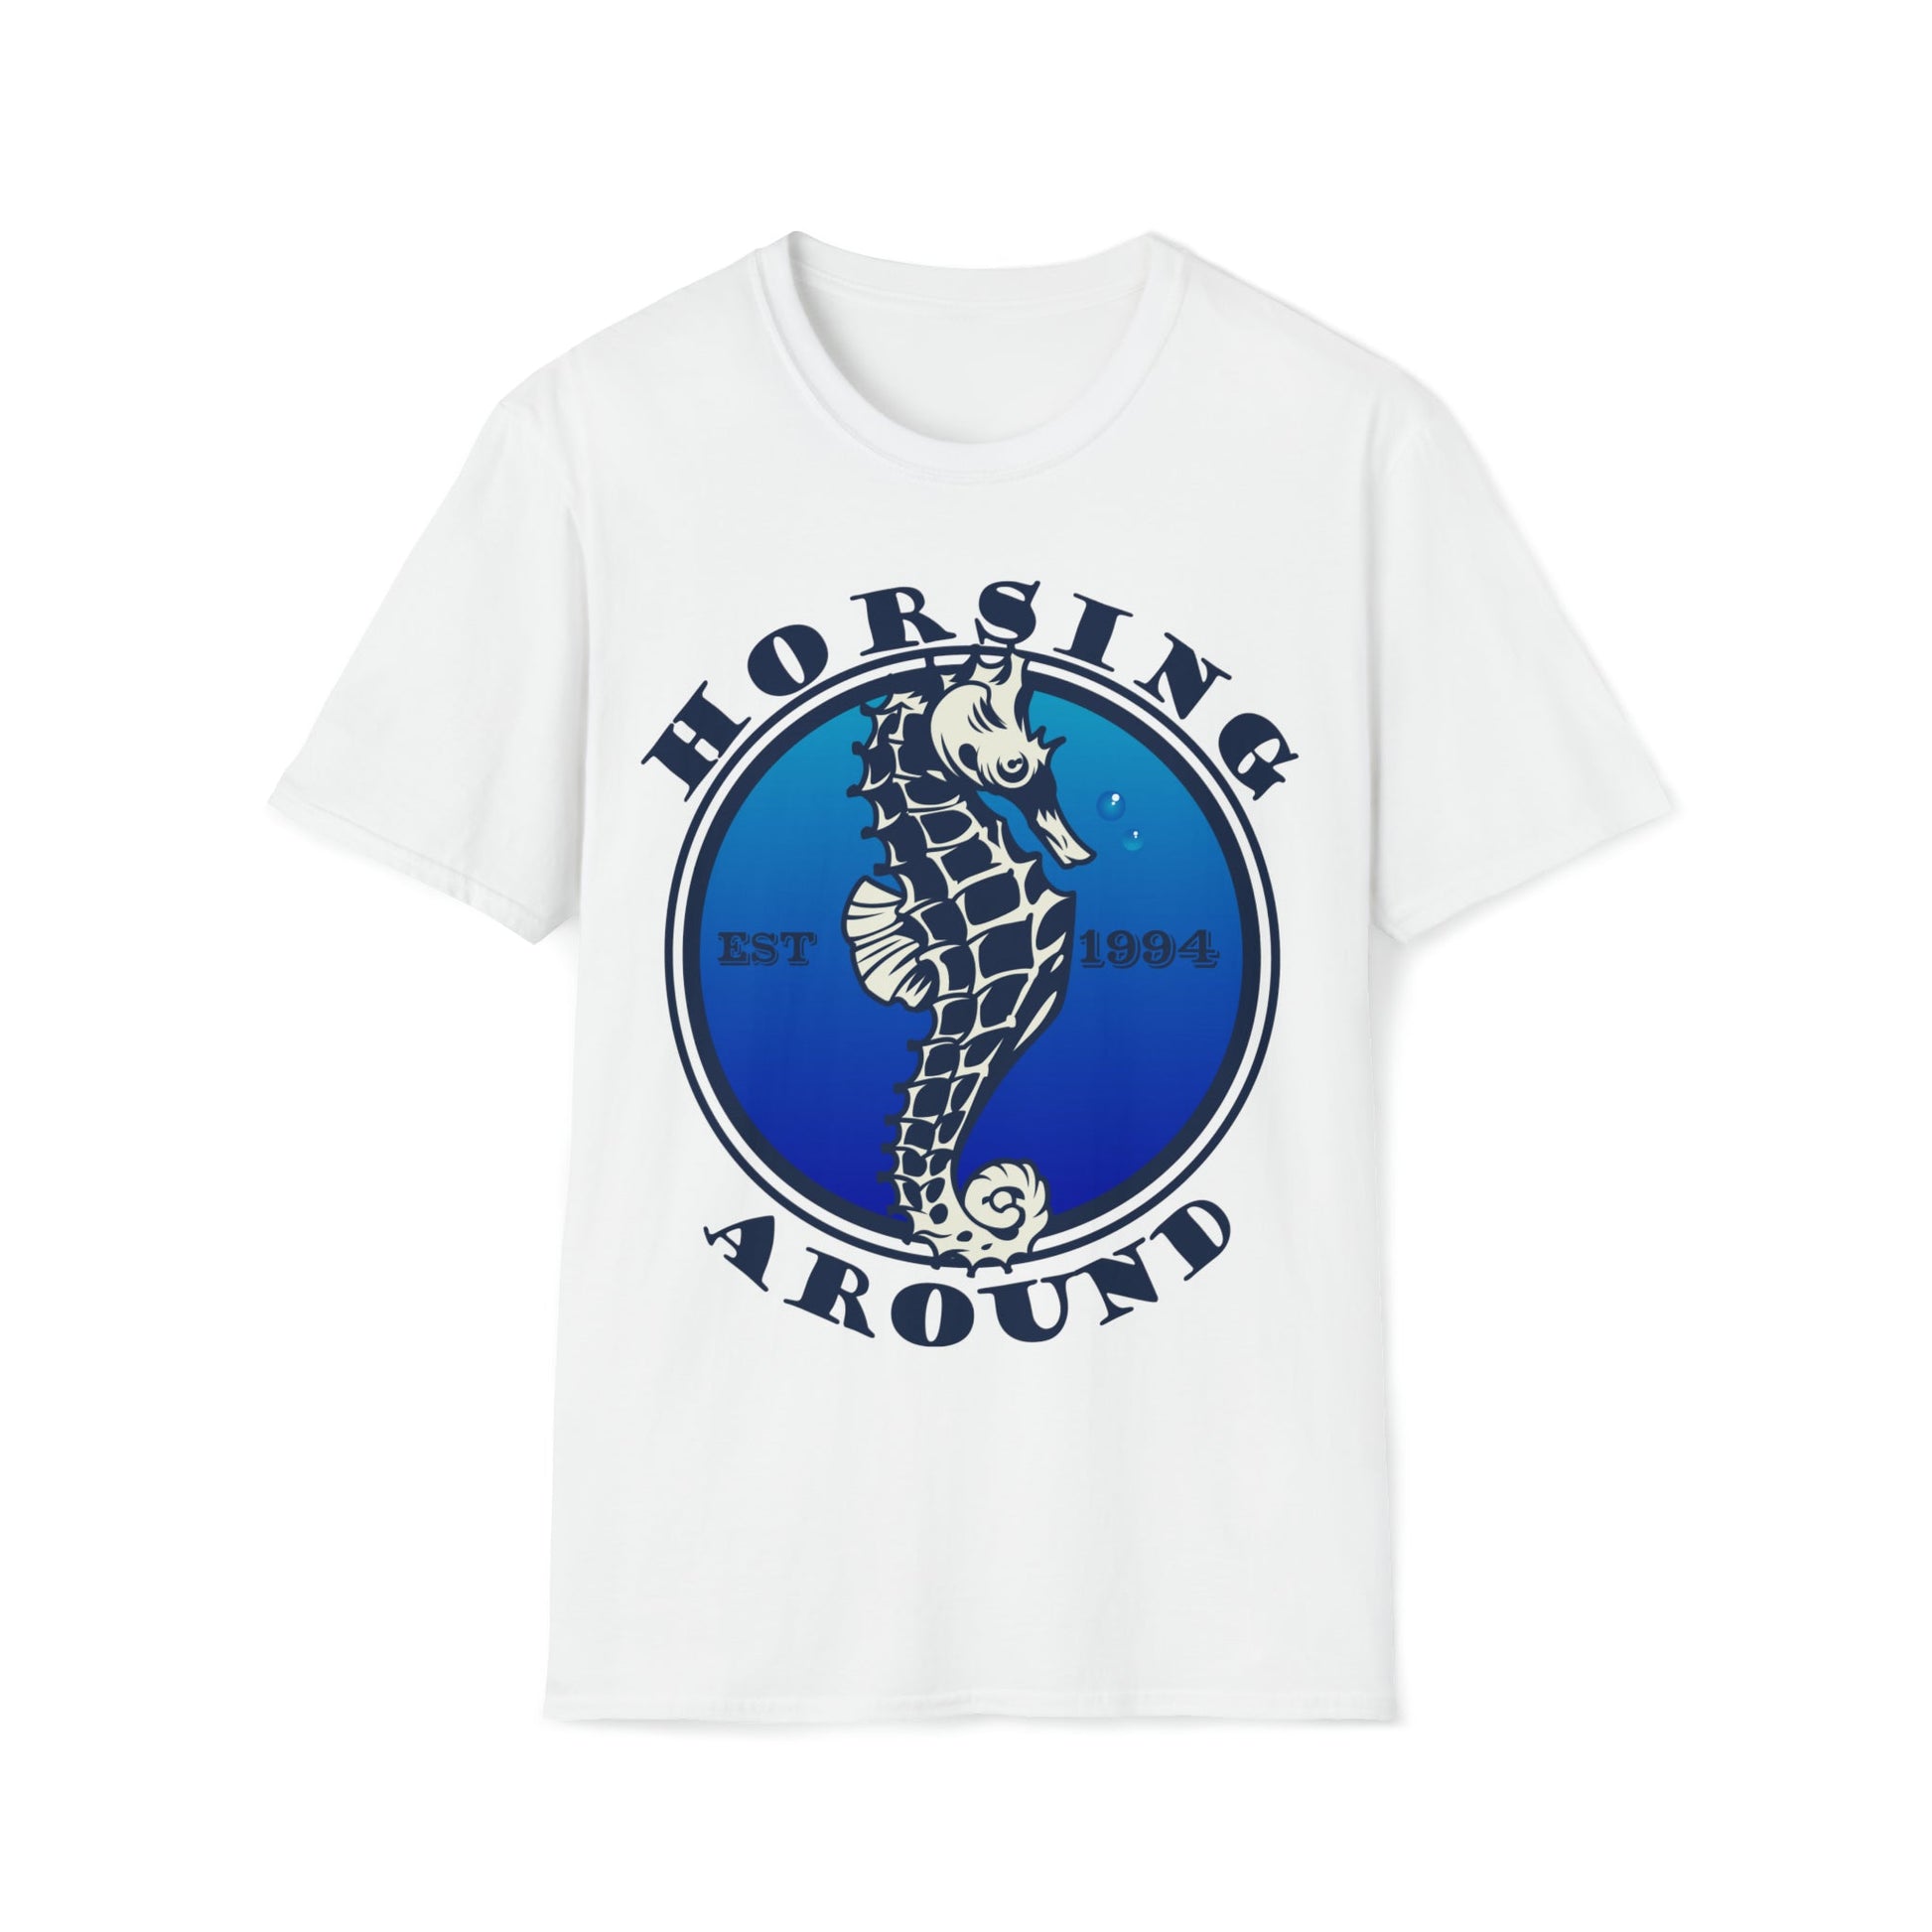 Horsing Around - Unisex Softstyle T-Shirt - Ohio Custom Designs & Apparel LLC